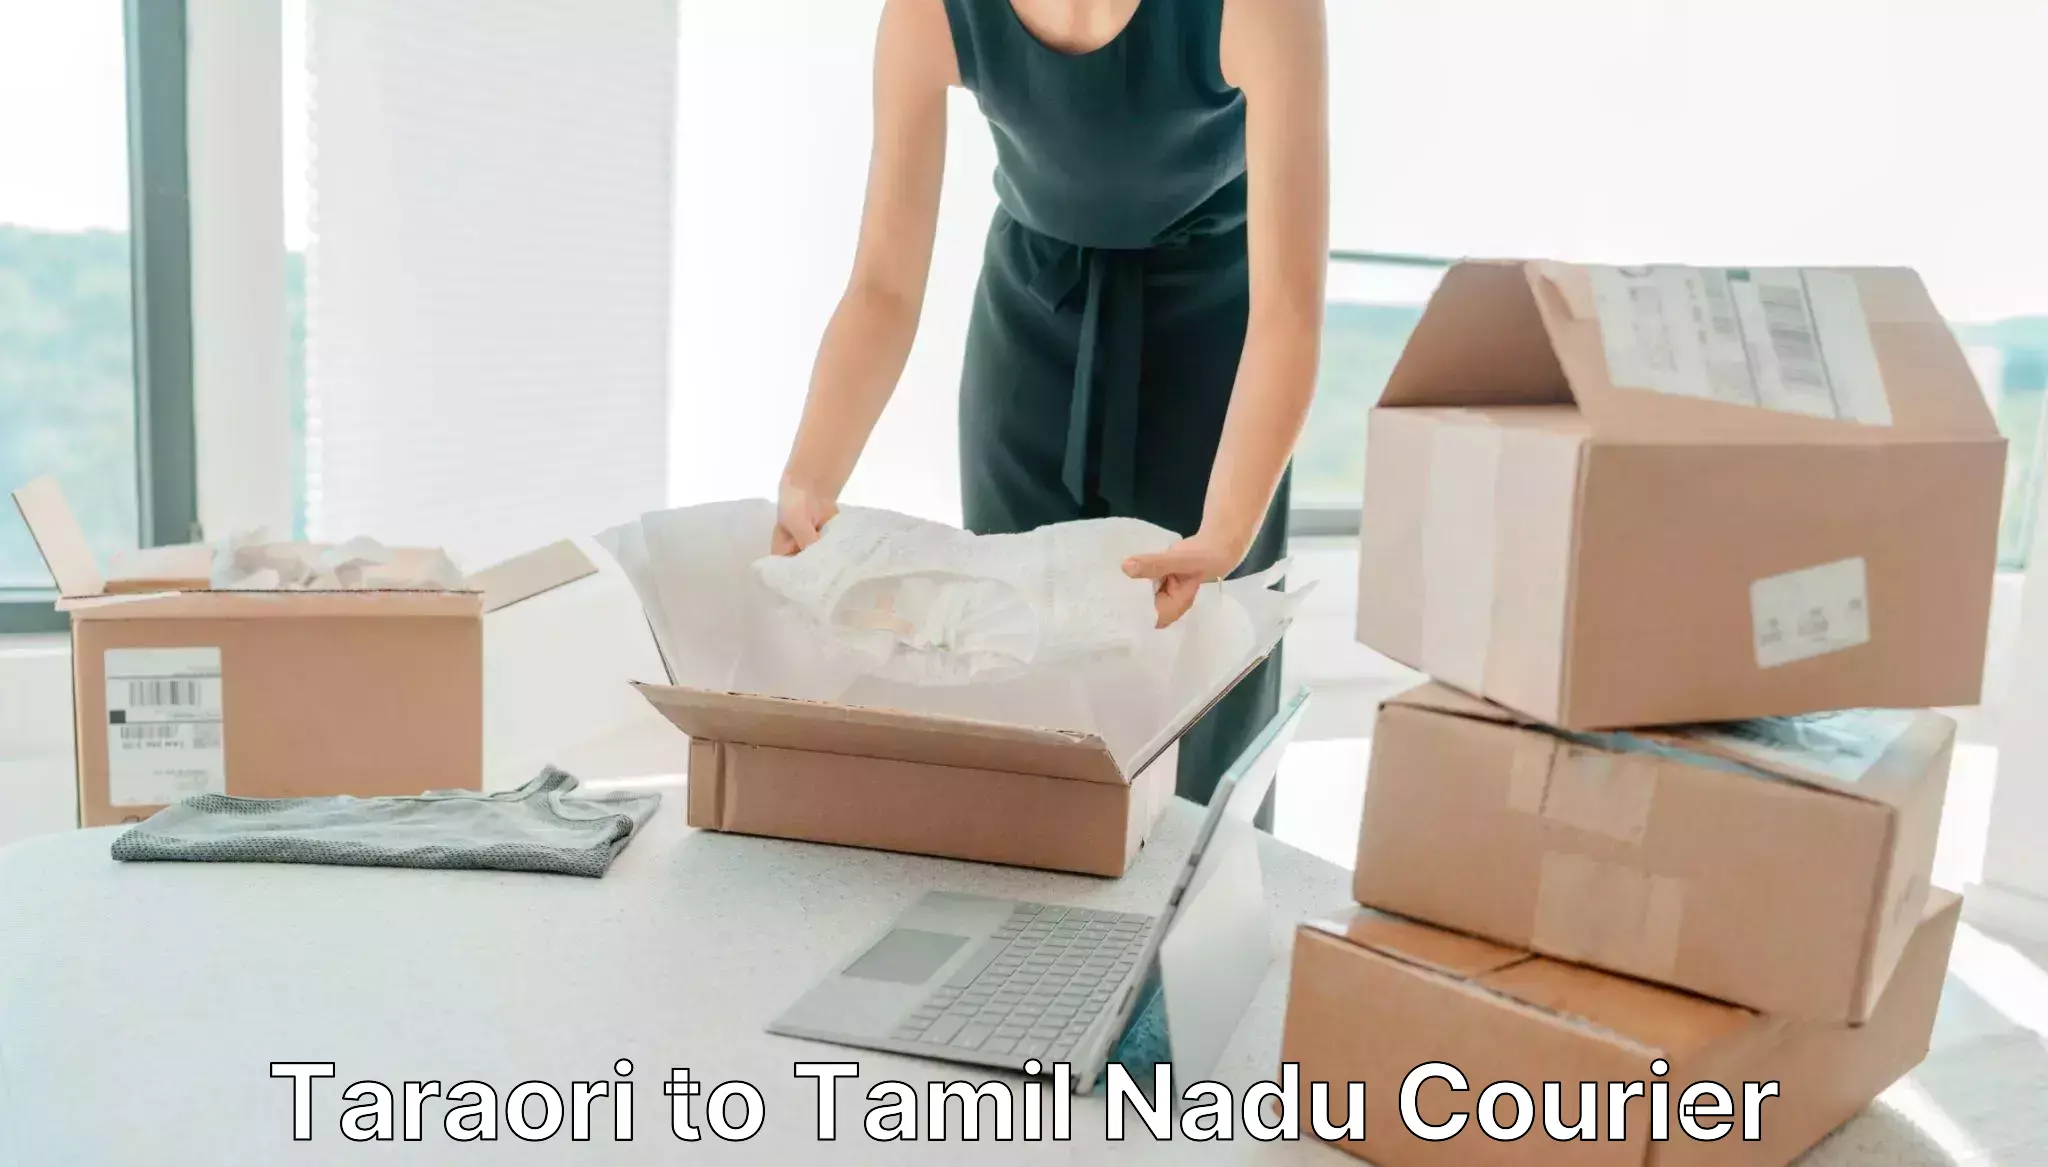 Seamless shipping experience in Taraori to Tamil Nadu